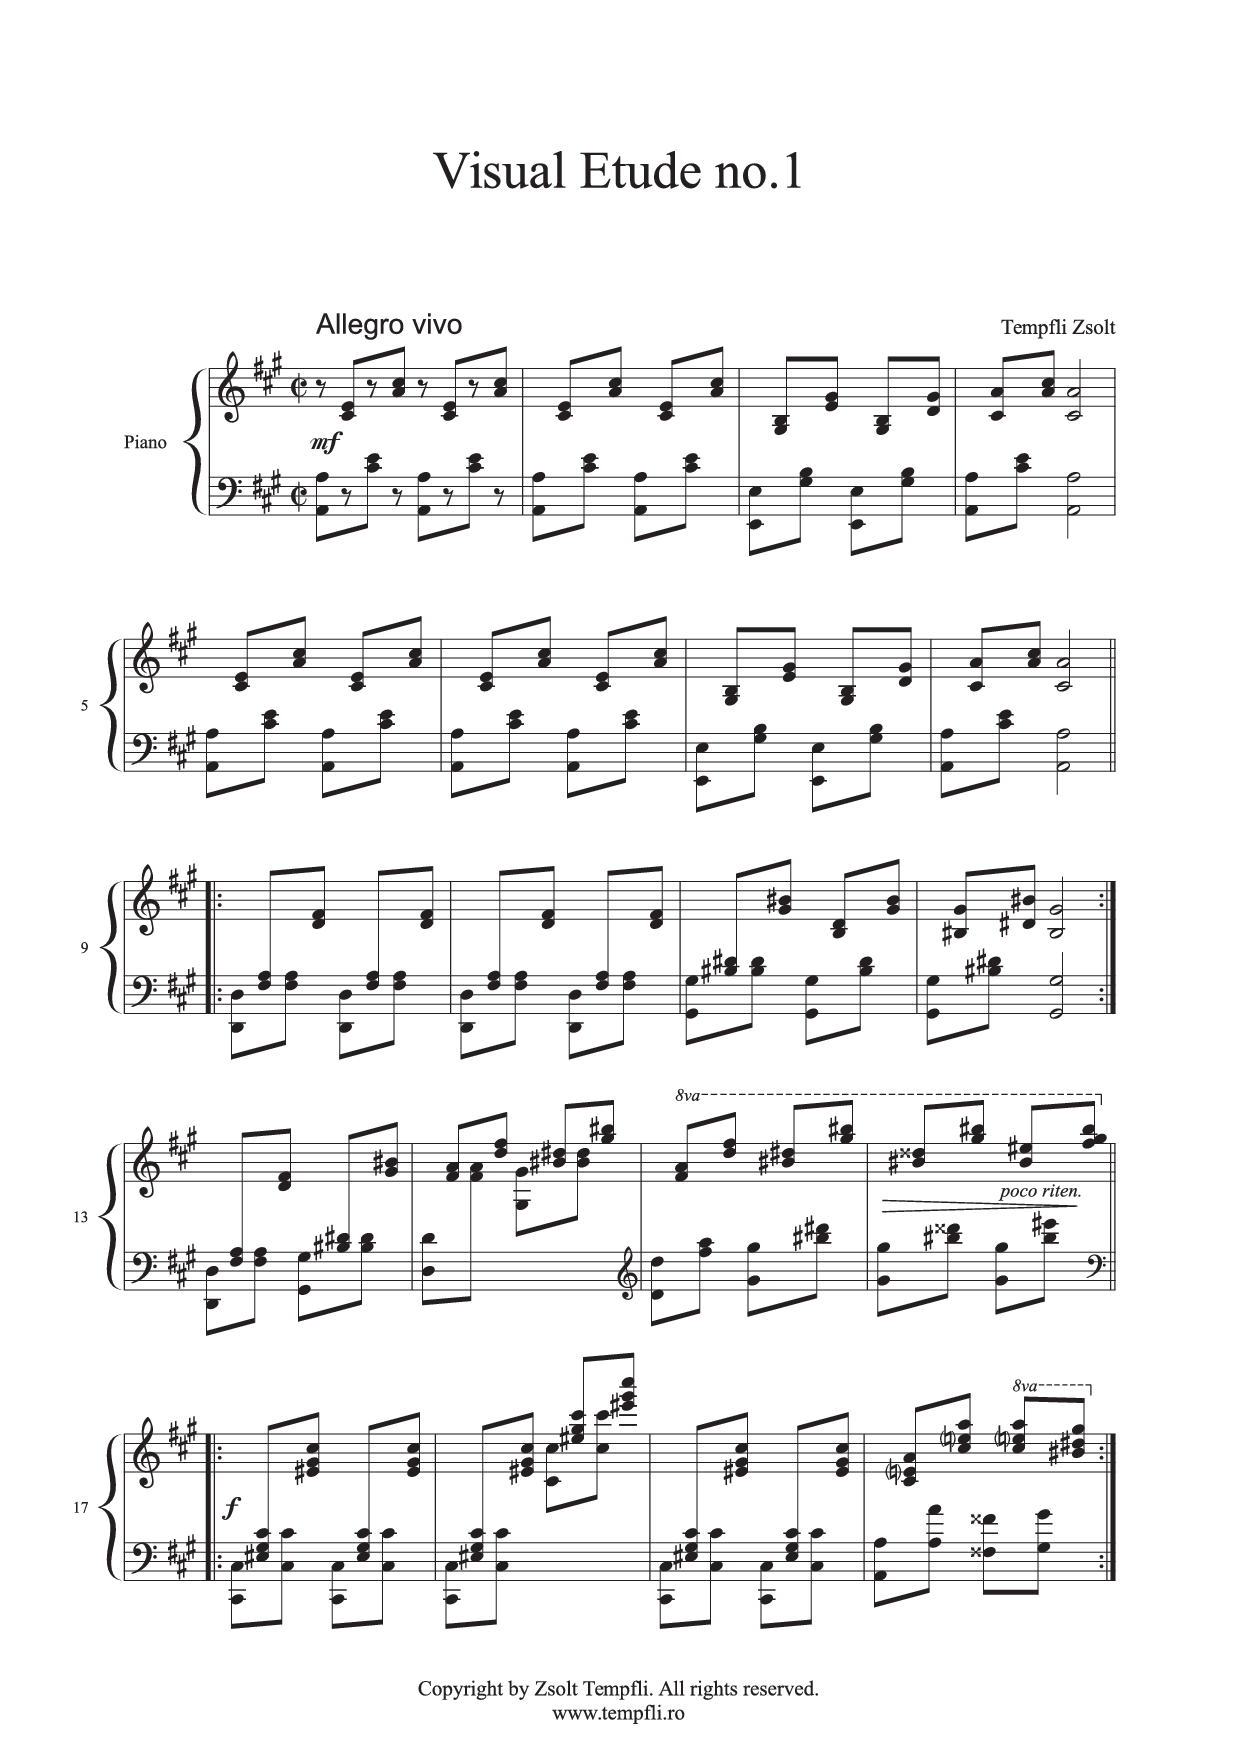 Zsolt Tempfli: Studiul vizual nr. 1, op. 19, pentru pian